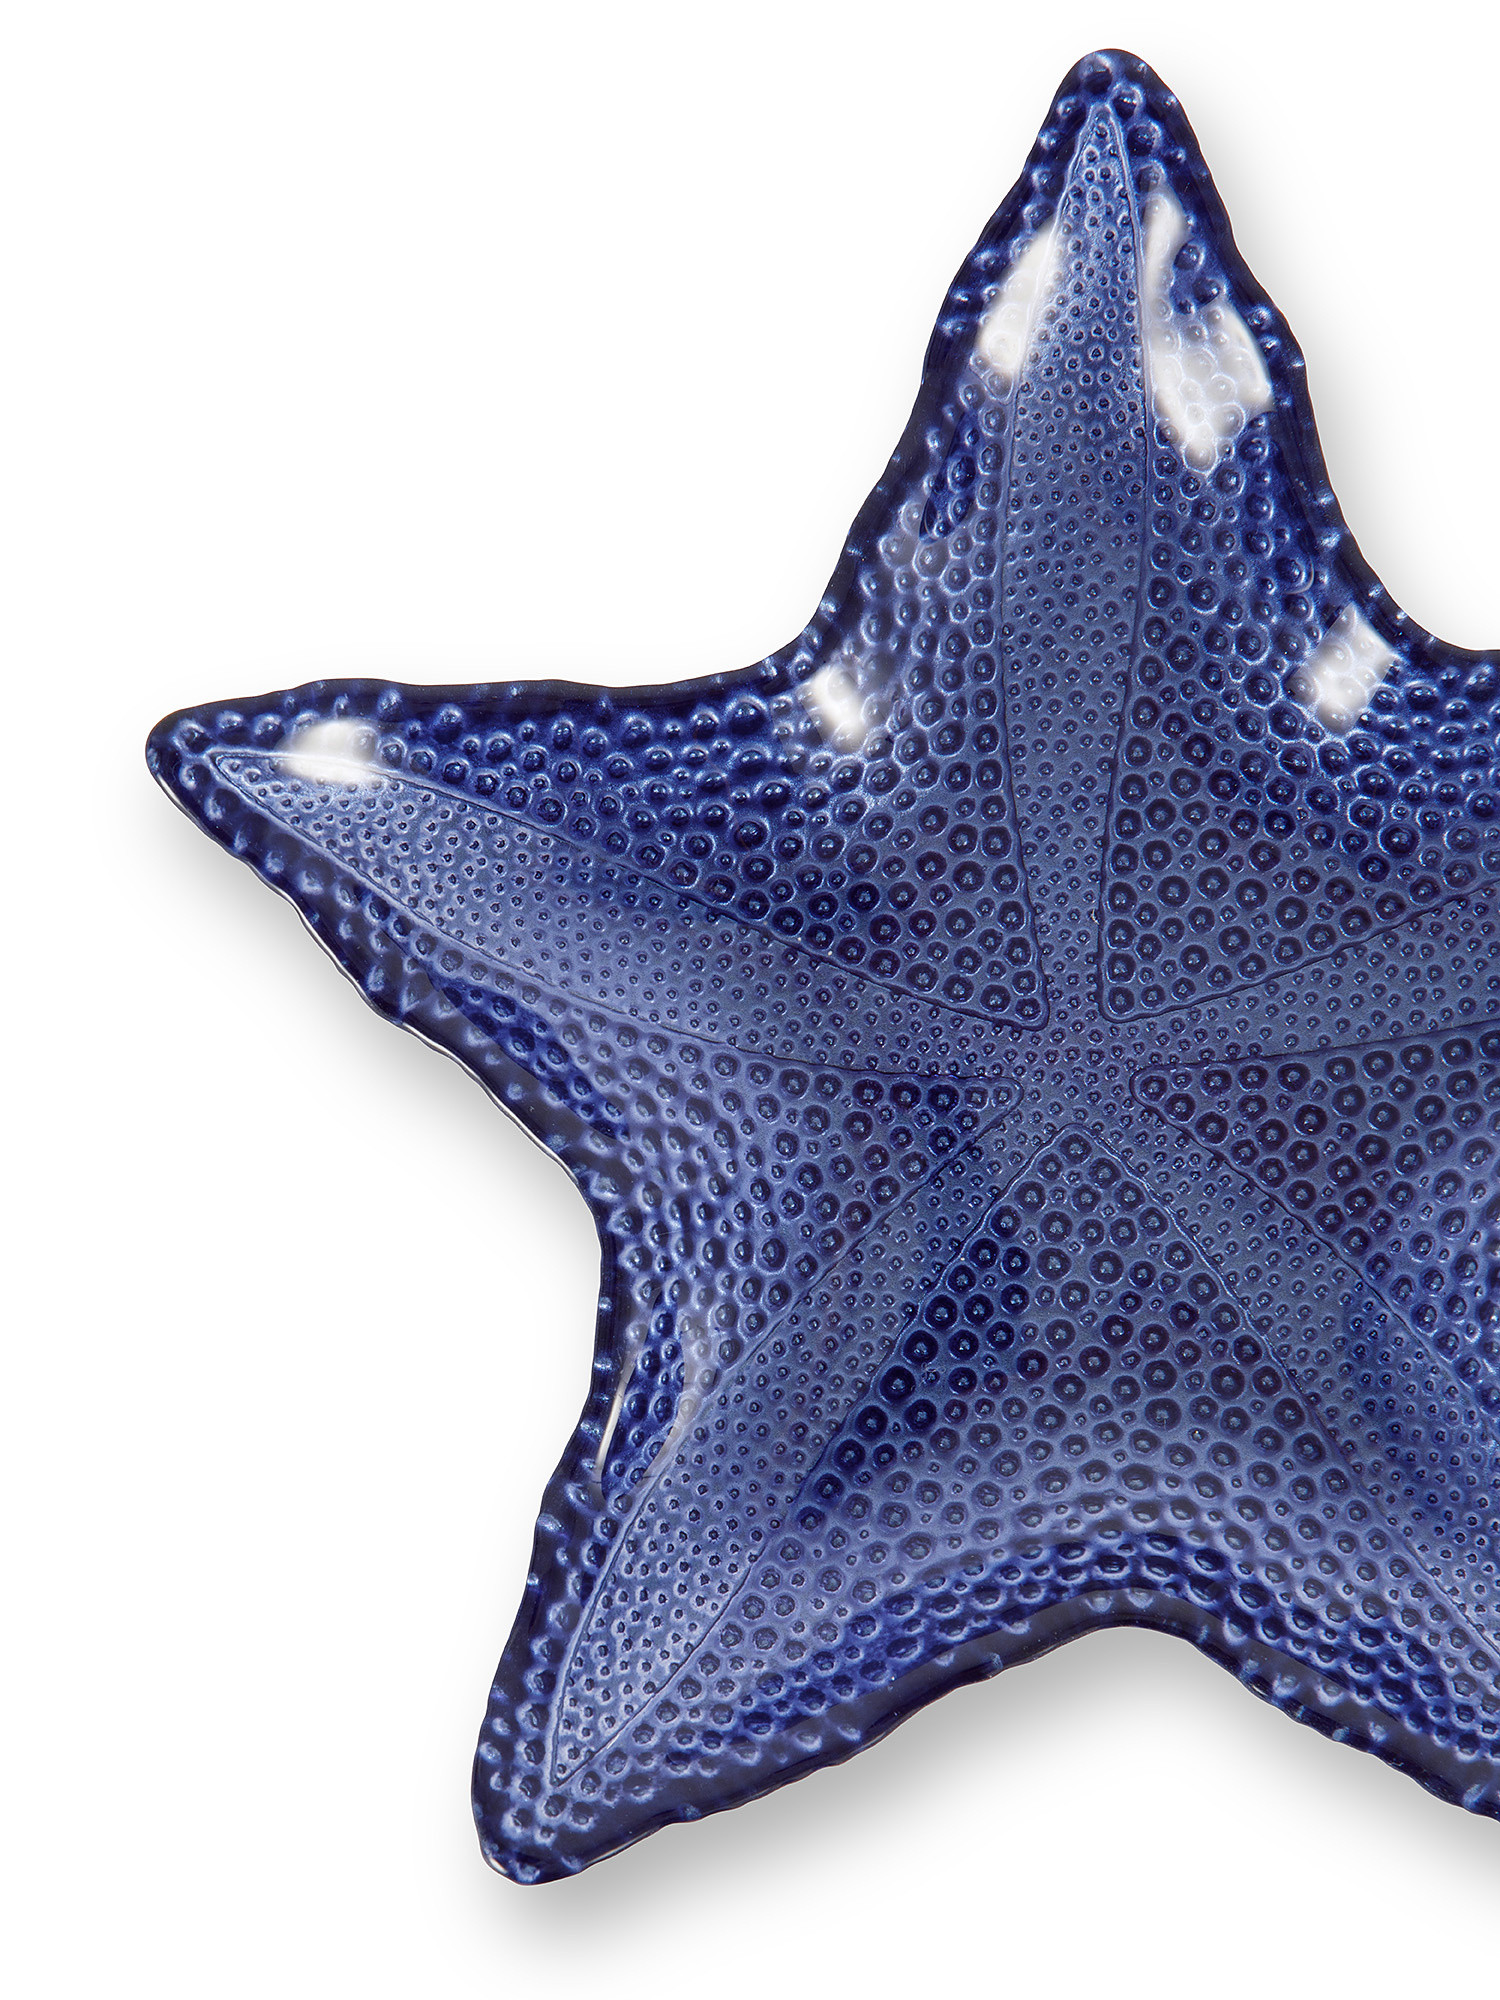 Piattino vetro a stella marina, Blu, large image number 1